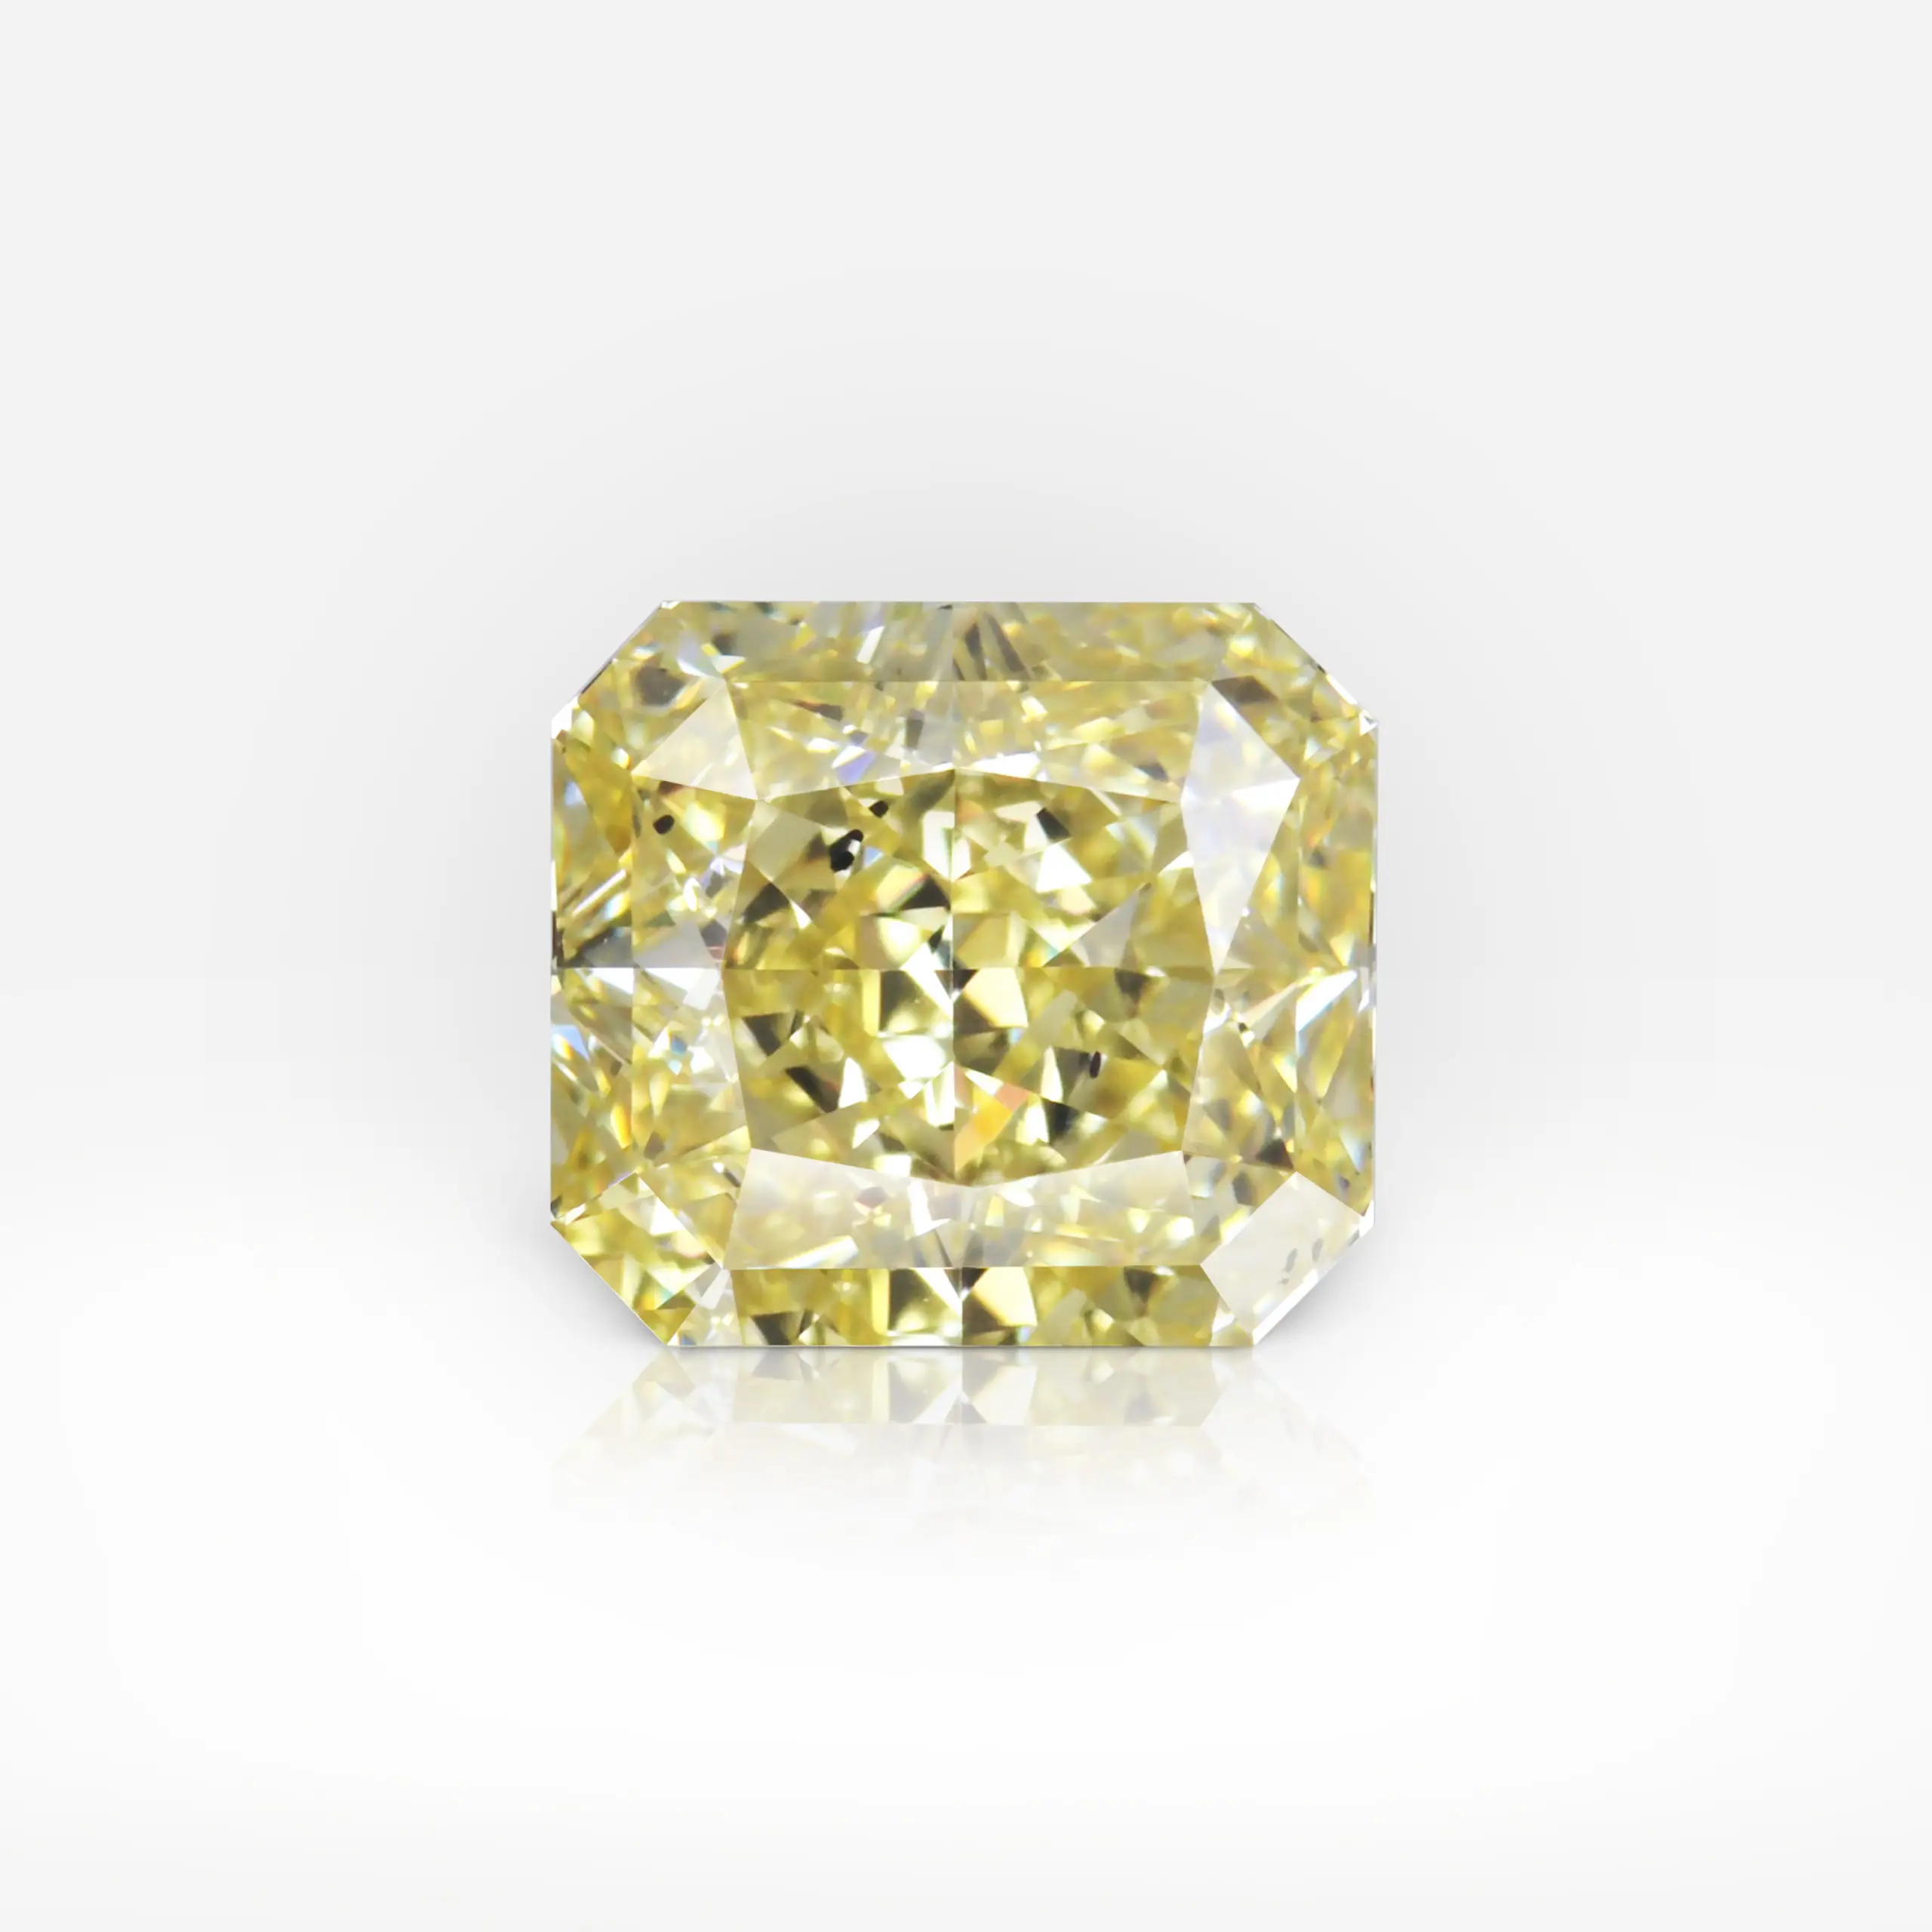 1.57 carat Fancy Intense Yellow VS2 Radiant Shape Diamond GIA - picture 1